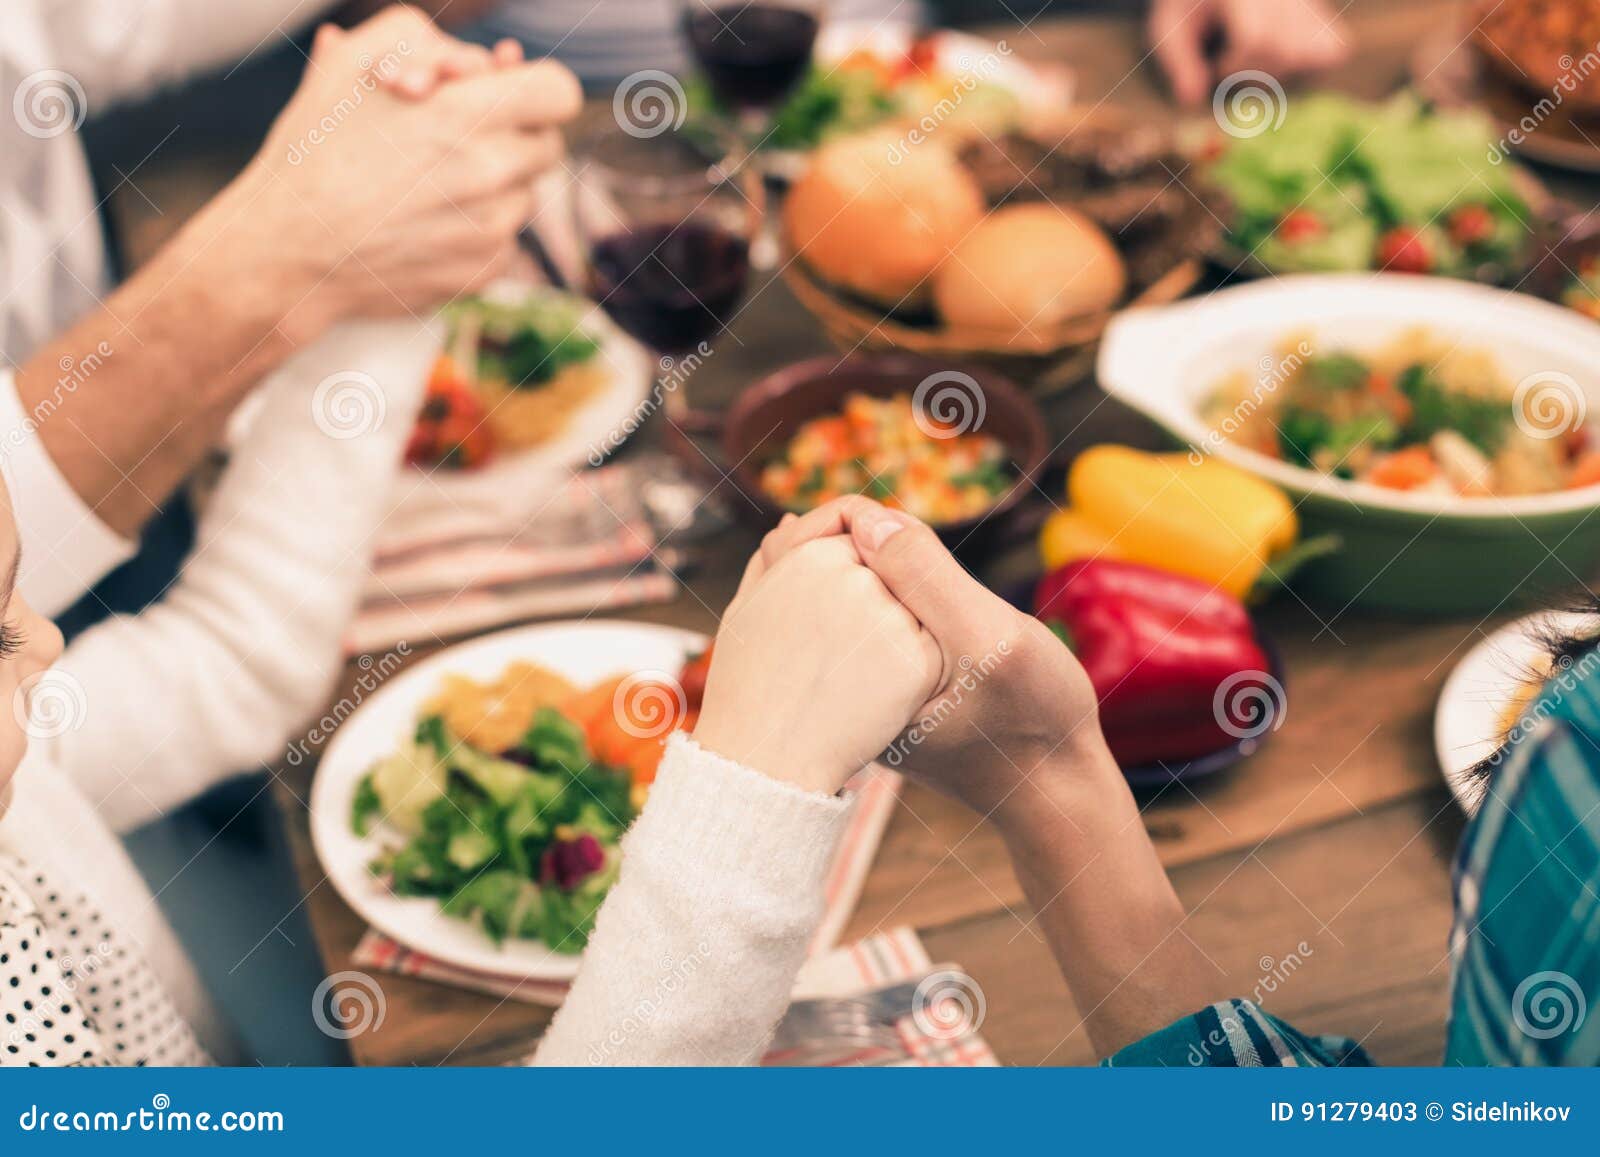 Nice Family Having Tasty Dinner Stock Image - Image of celebration